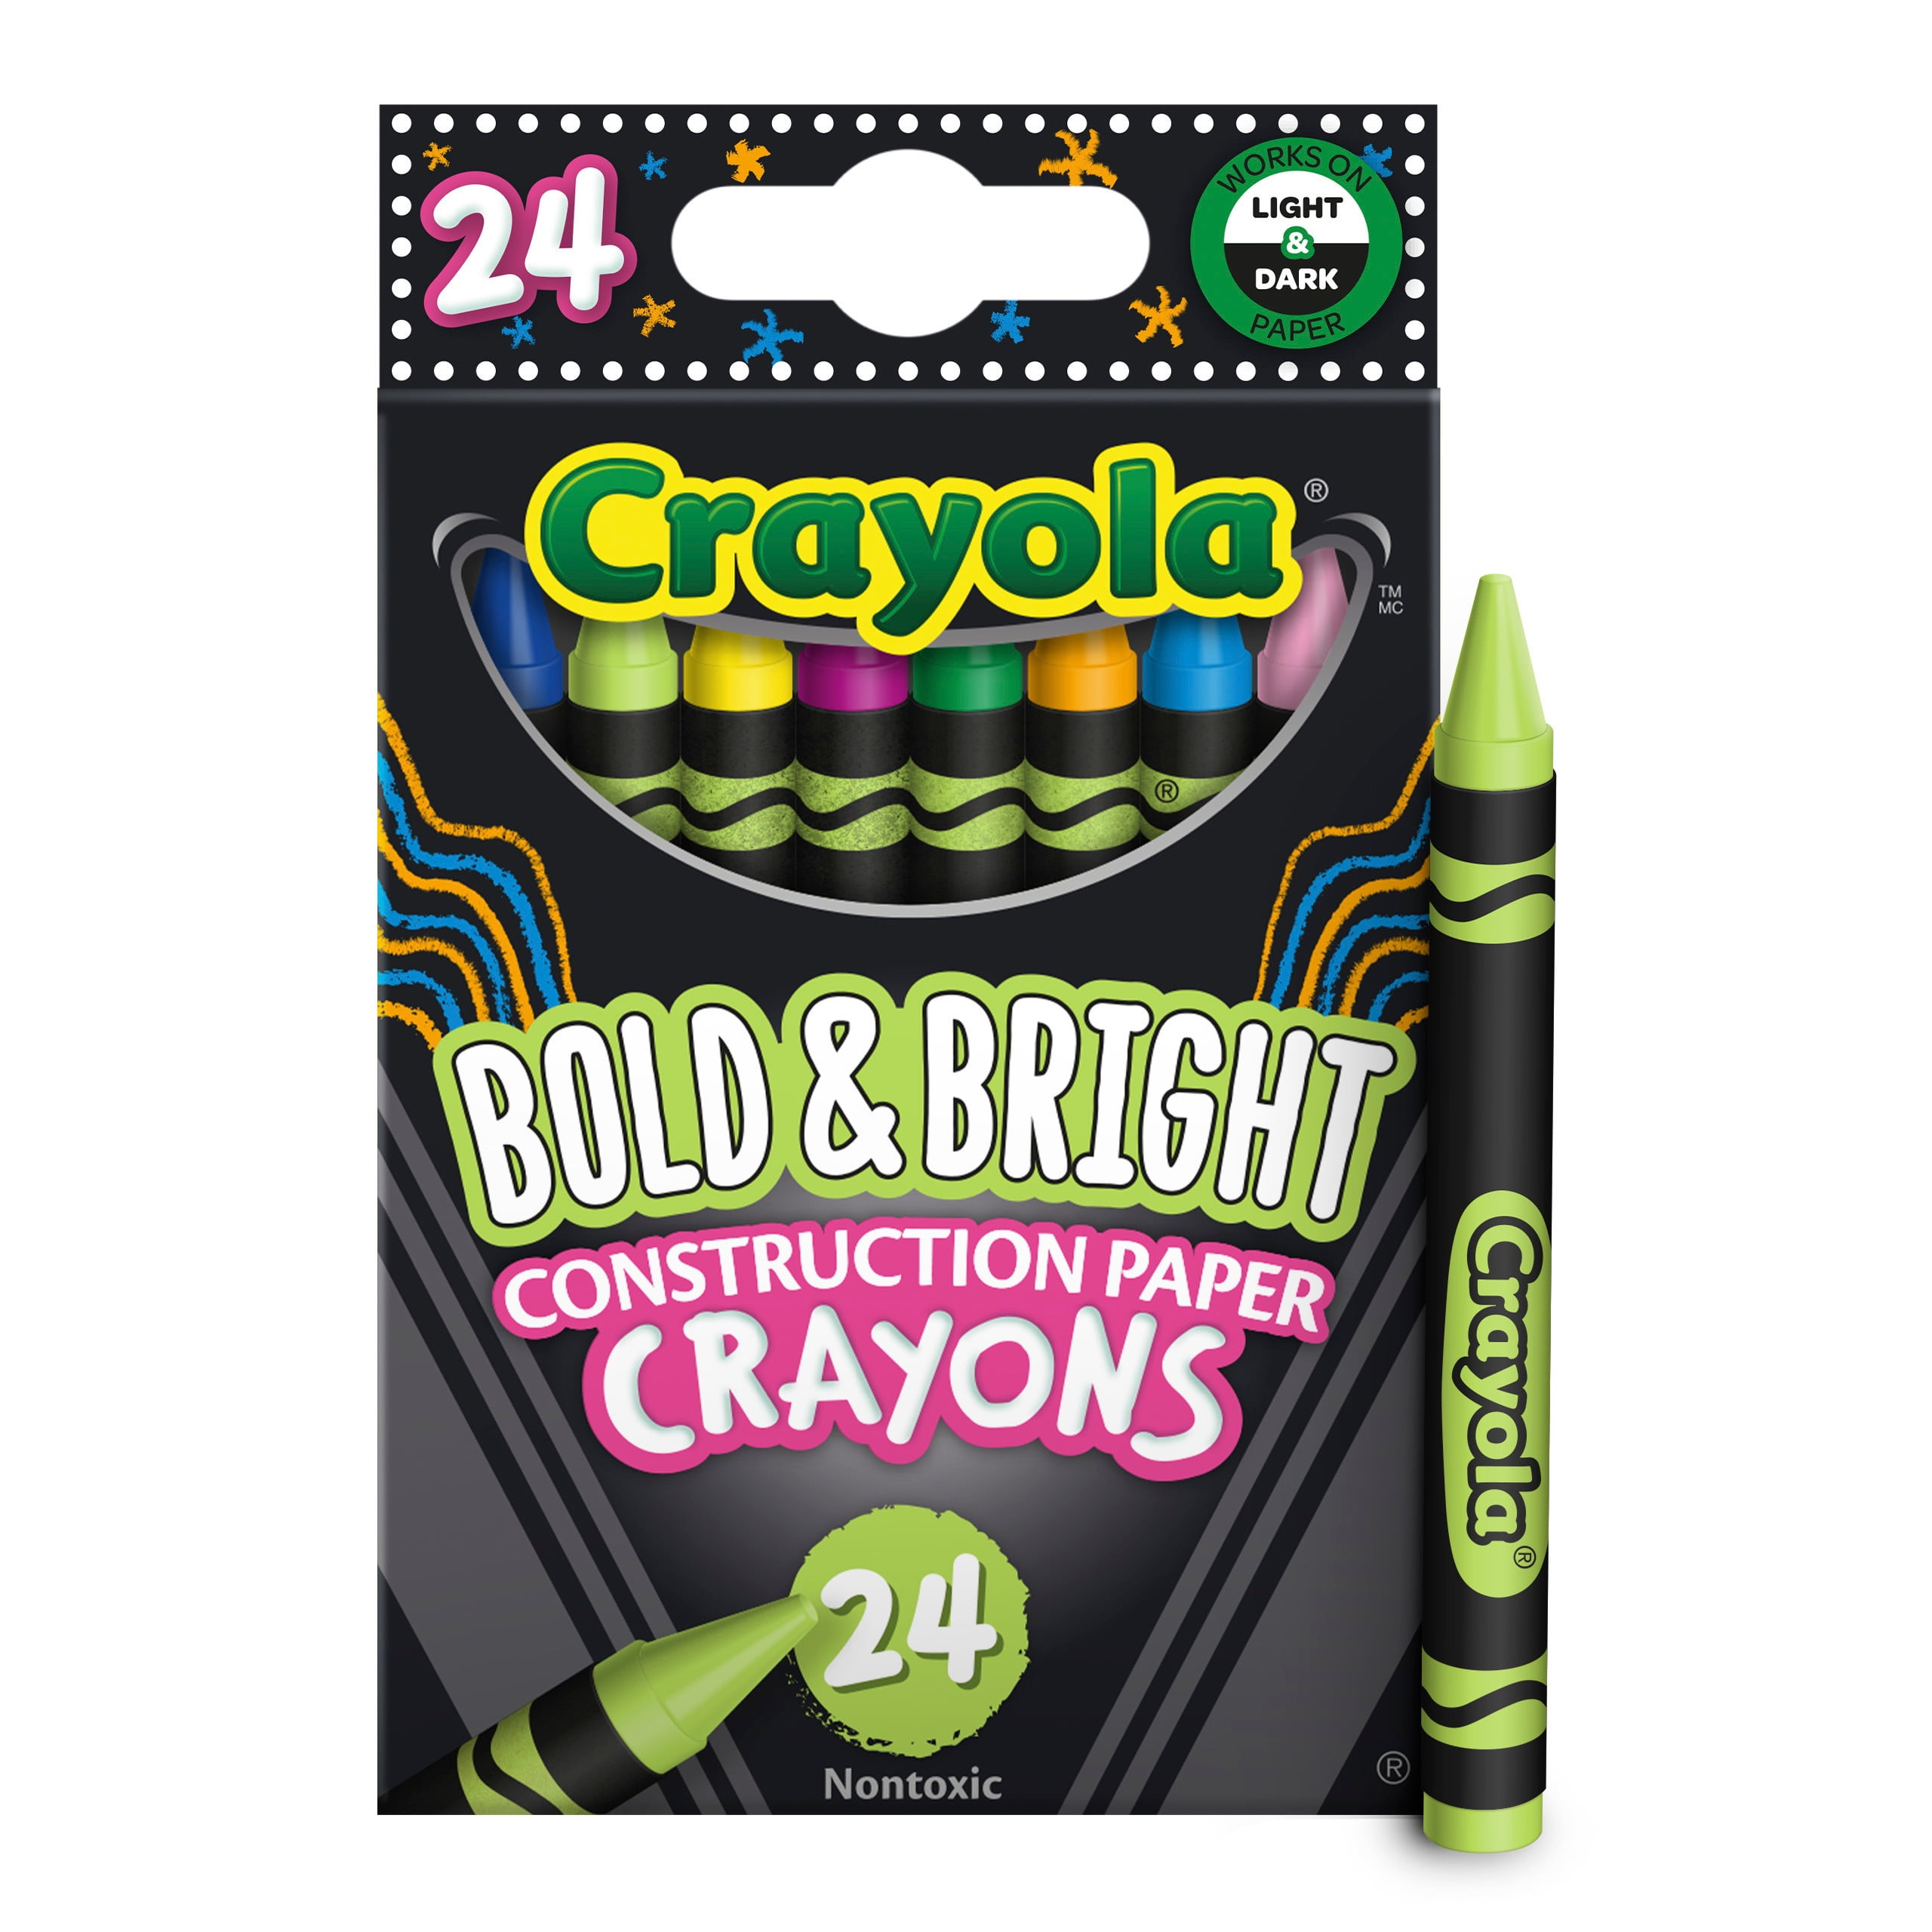 Crayola Construction Paper Crayons, School & Art Supplies, Easter Basket Stuffers, 24 Ct